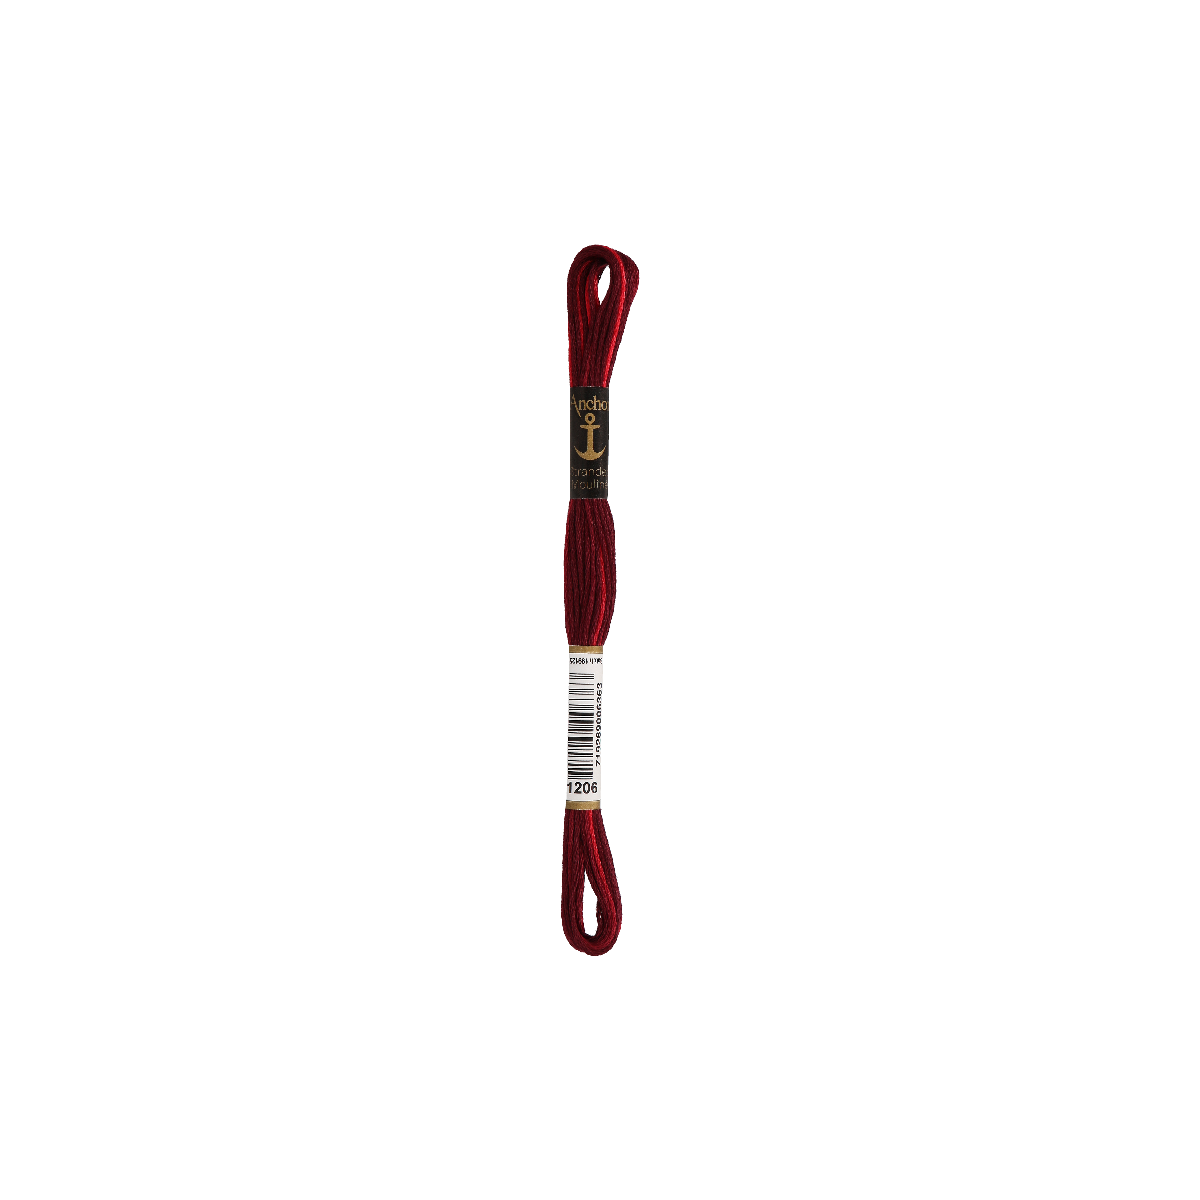 Anchor Sticktwist 8m, dkl red ombre, cotone, colore 1206,...